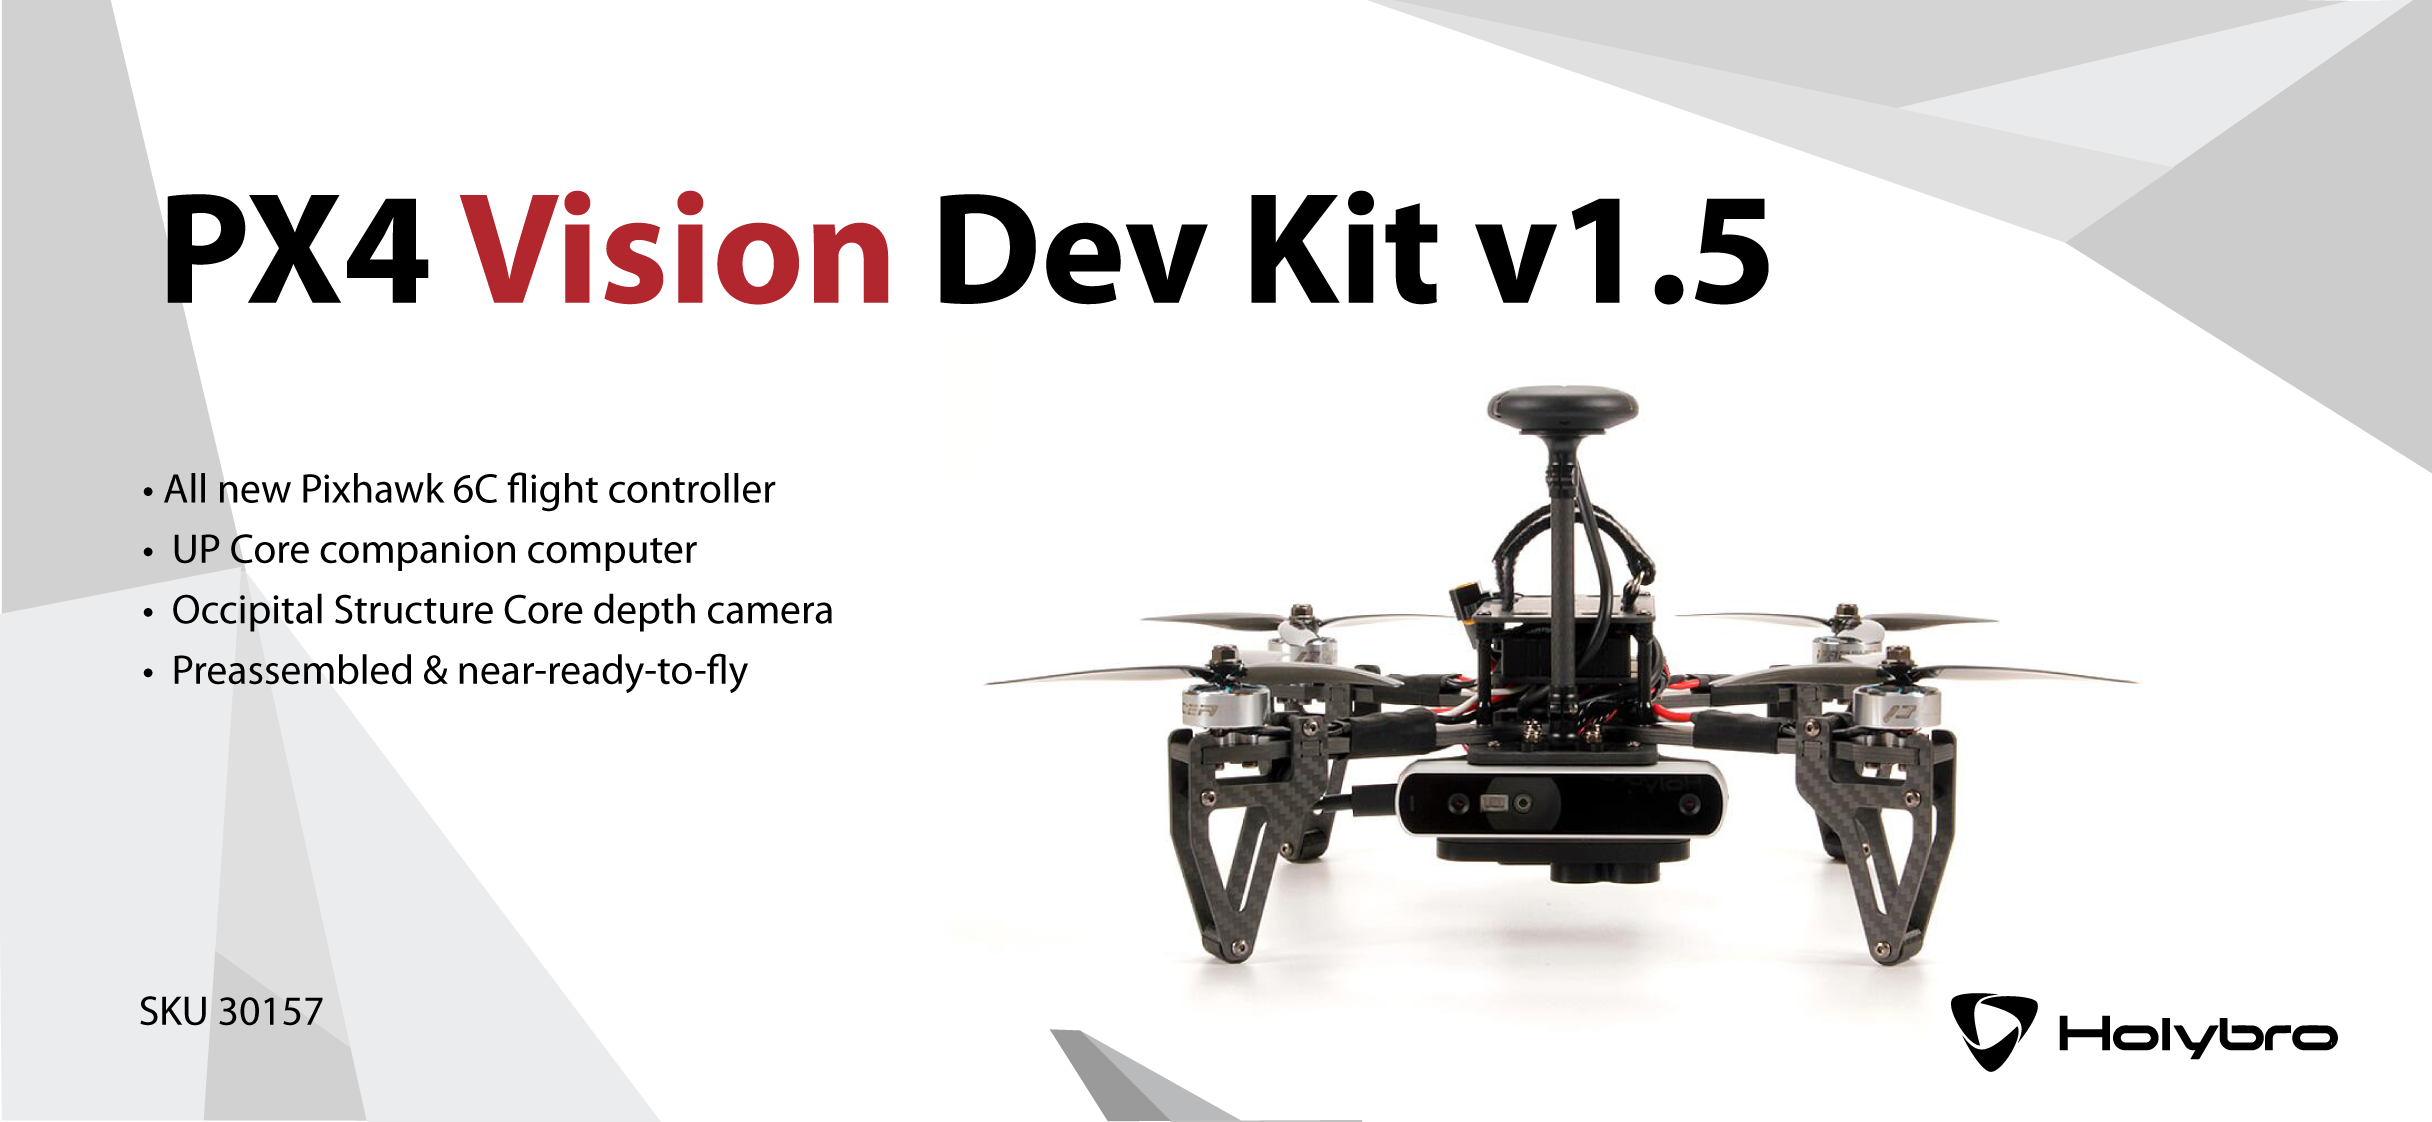 PX4 Vision Dev Kit v1.5